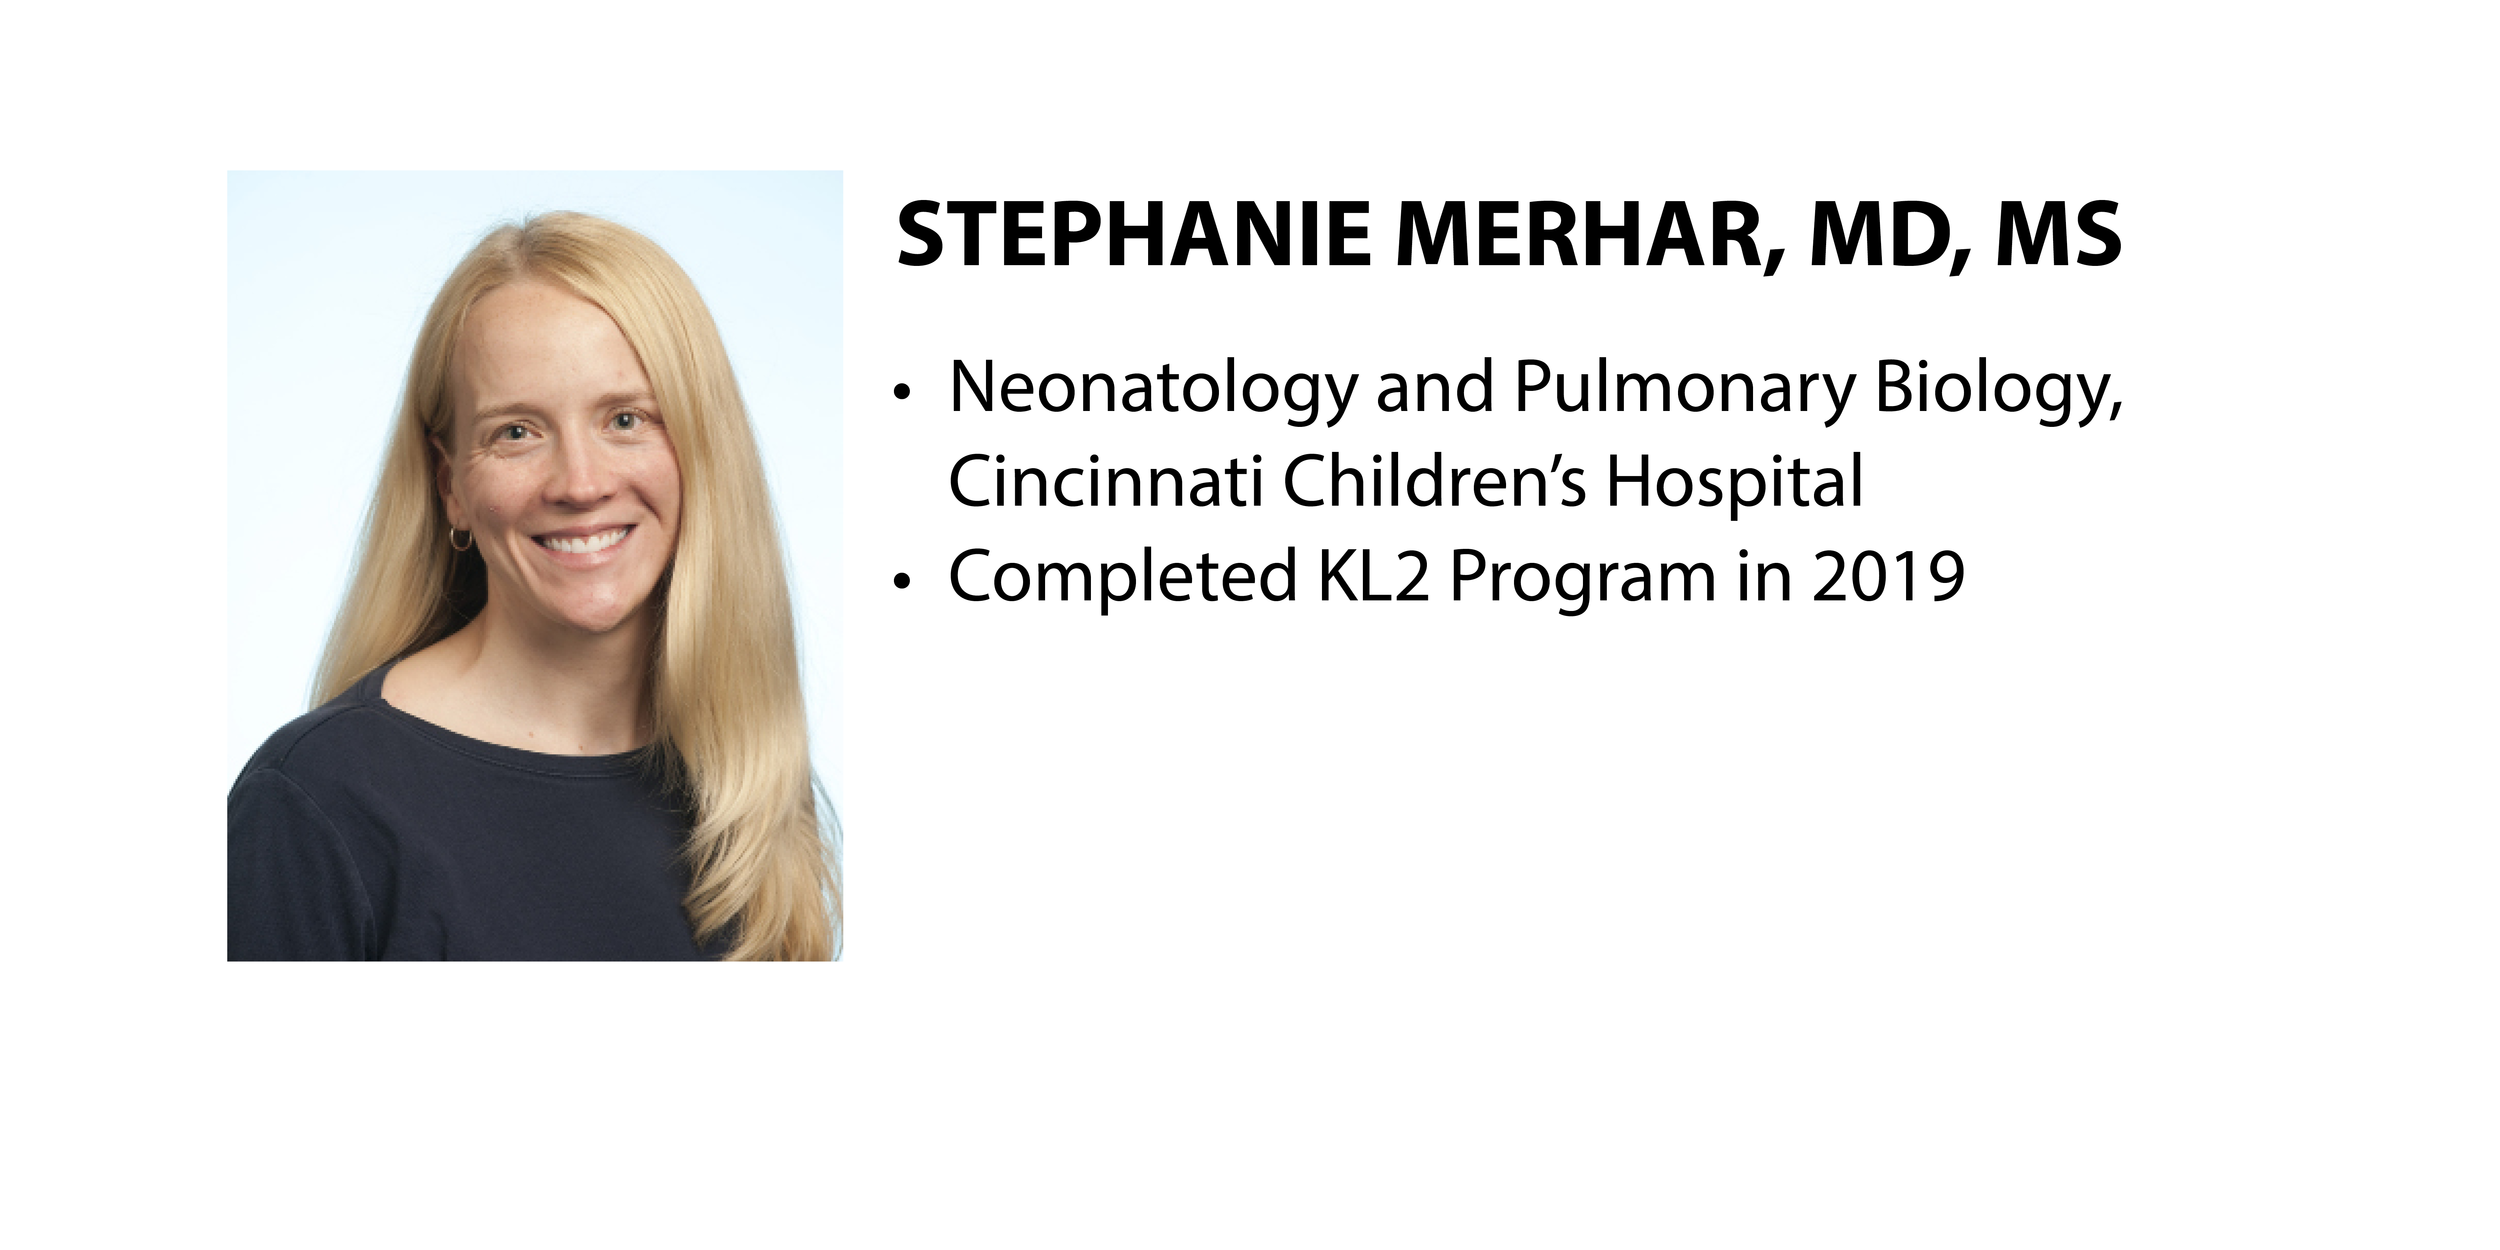 K Scholar Overview: Stephanie Merhar